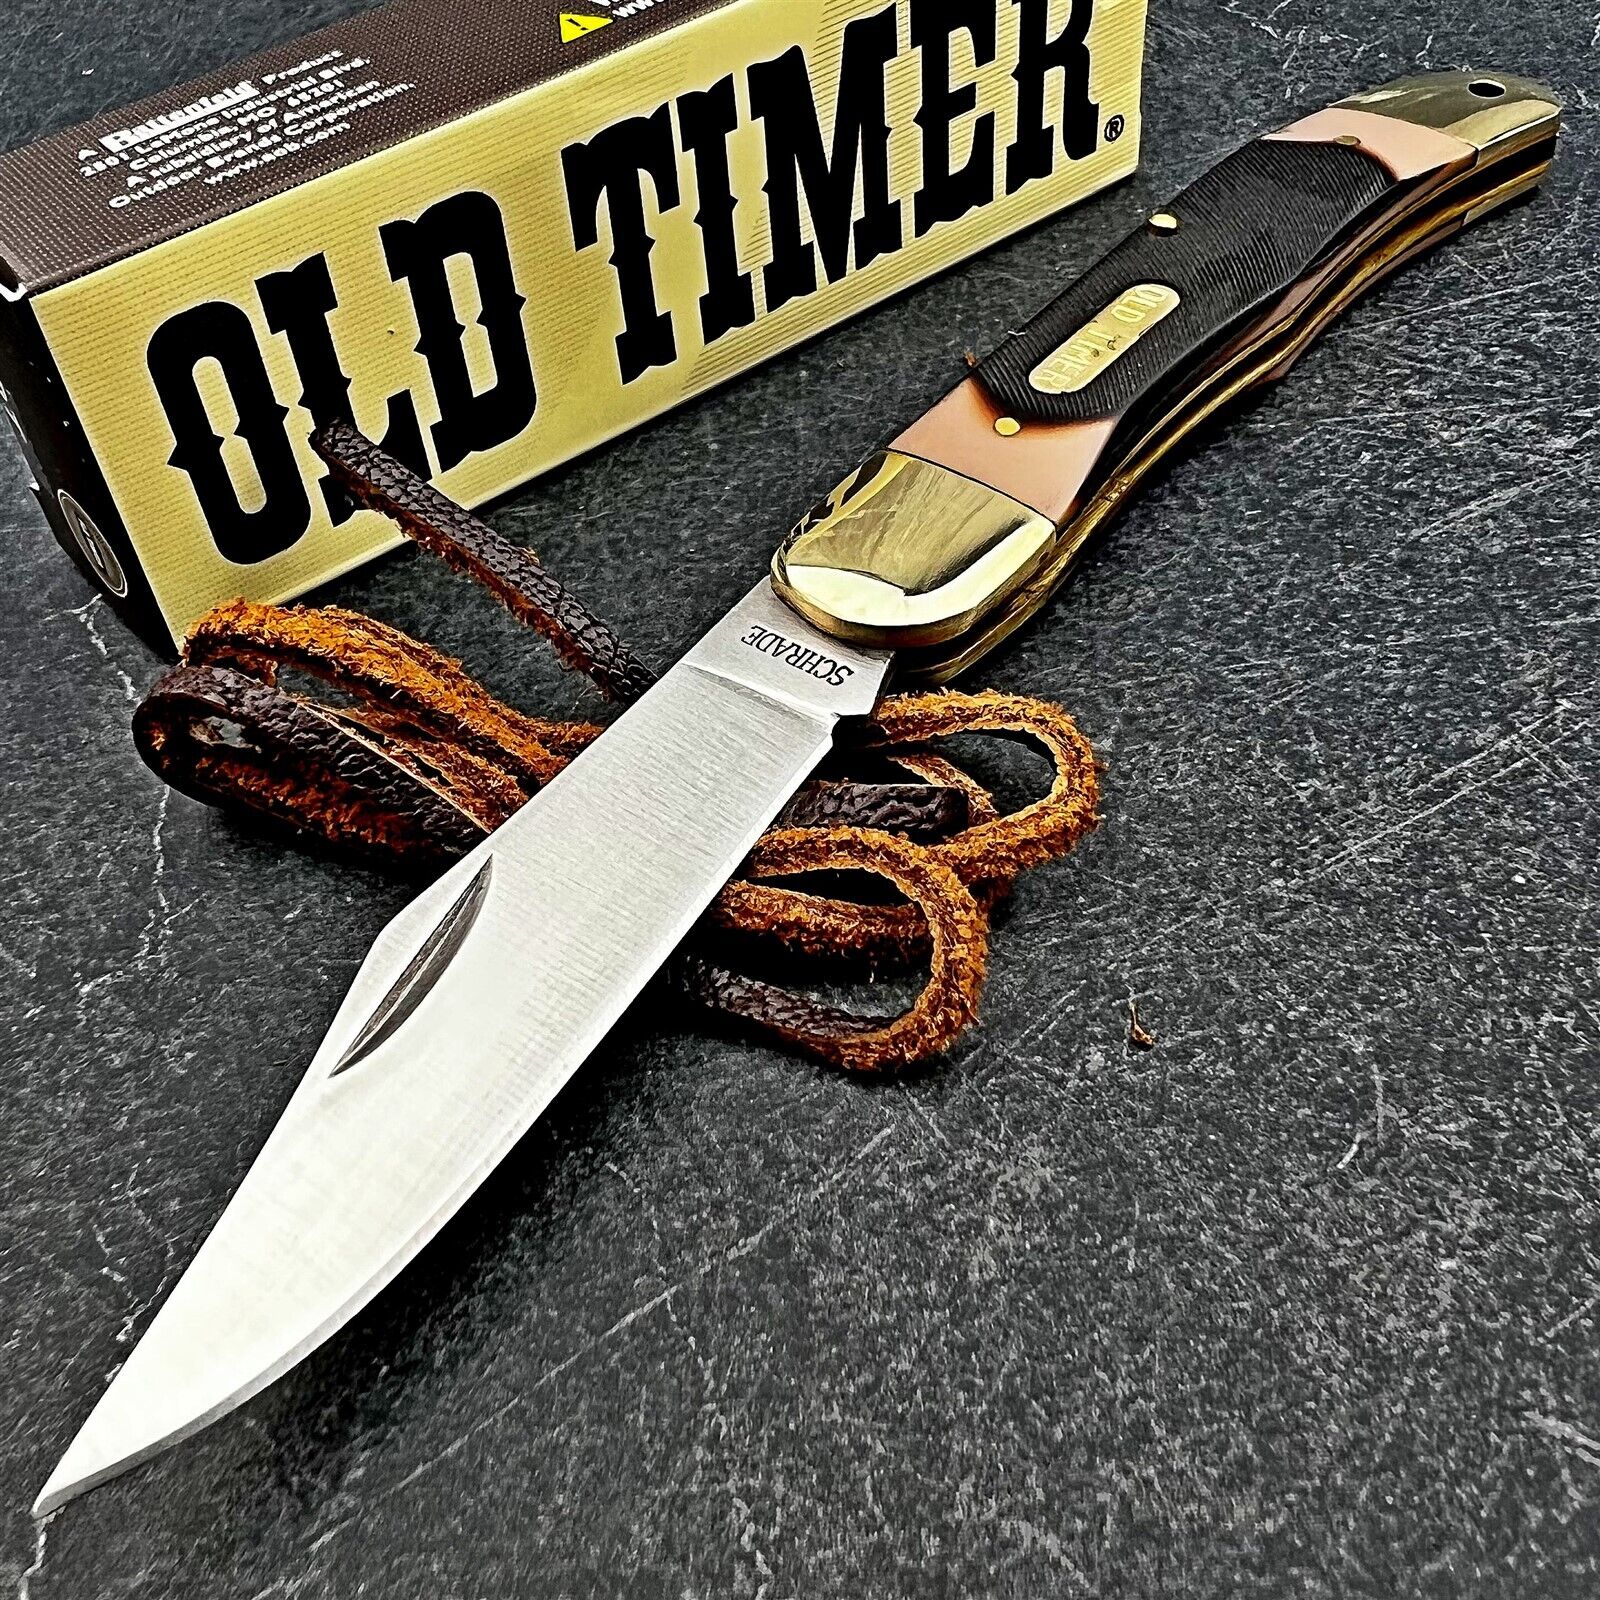 Schrade Old Timer Pioneer Brown Delrin Sawcut Handles Folding EDC Pocket Knife